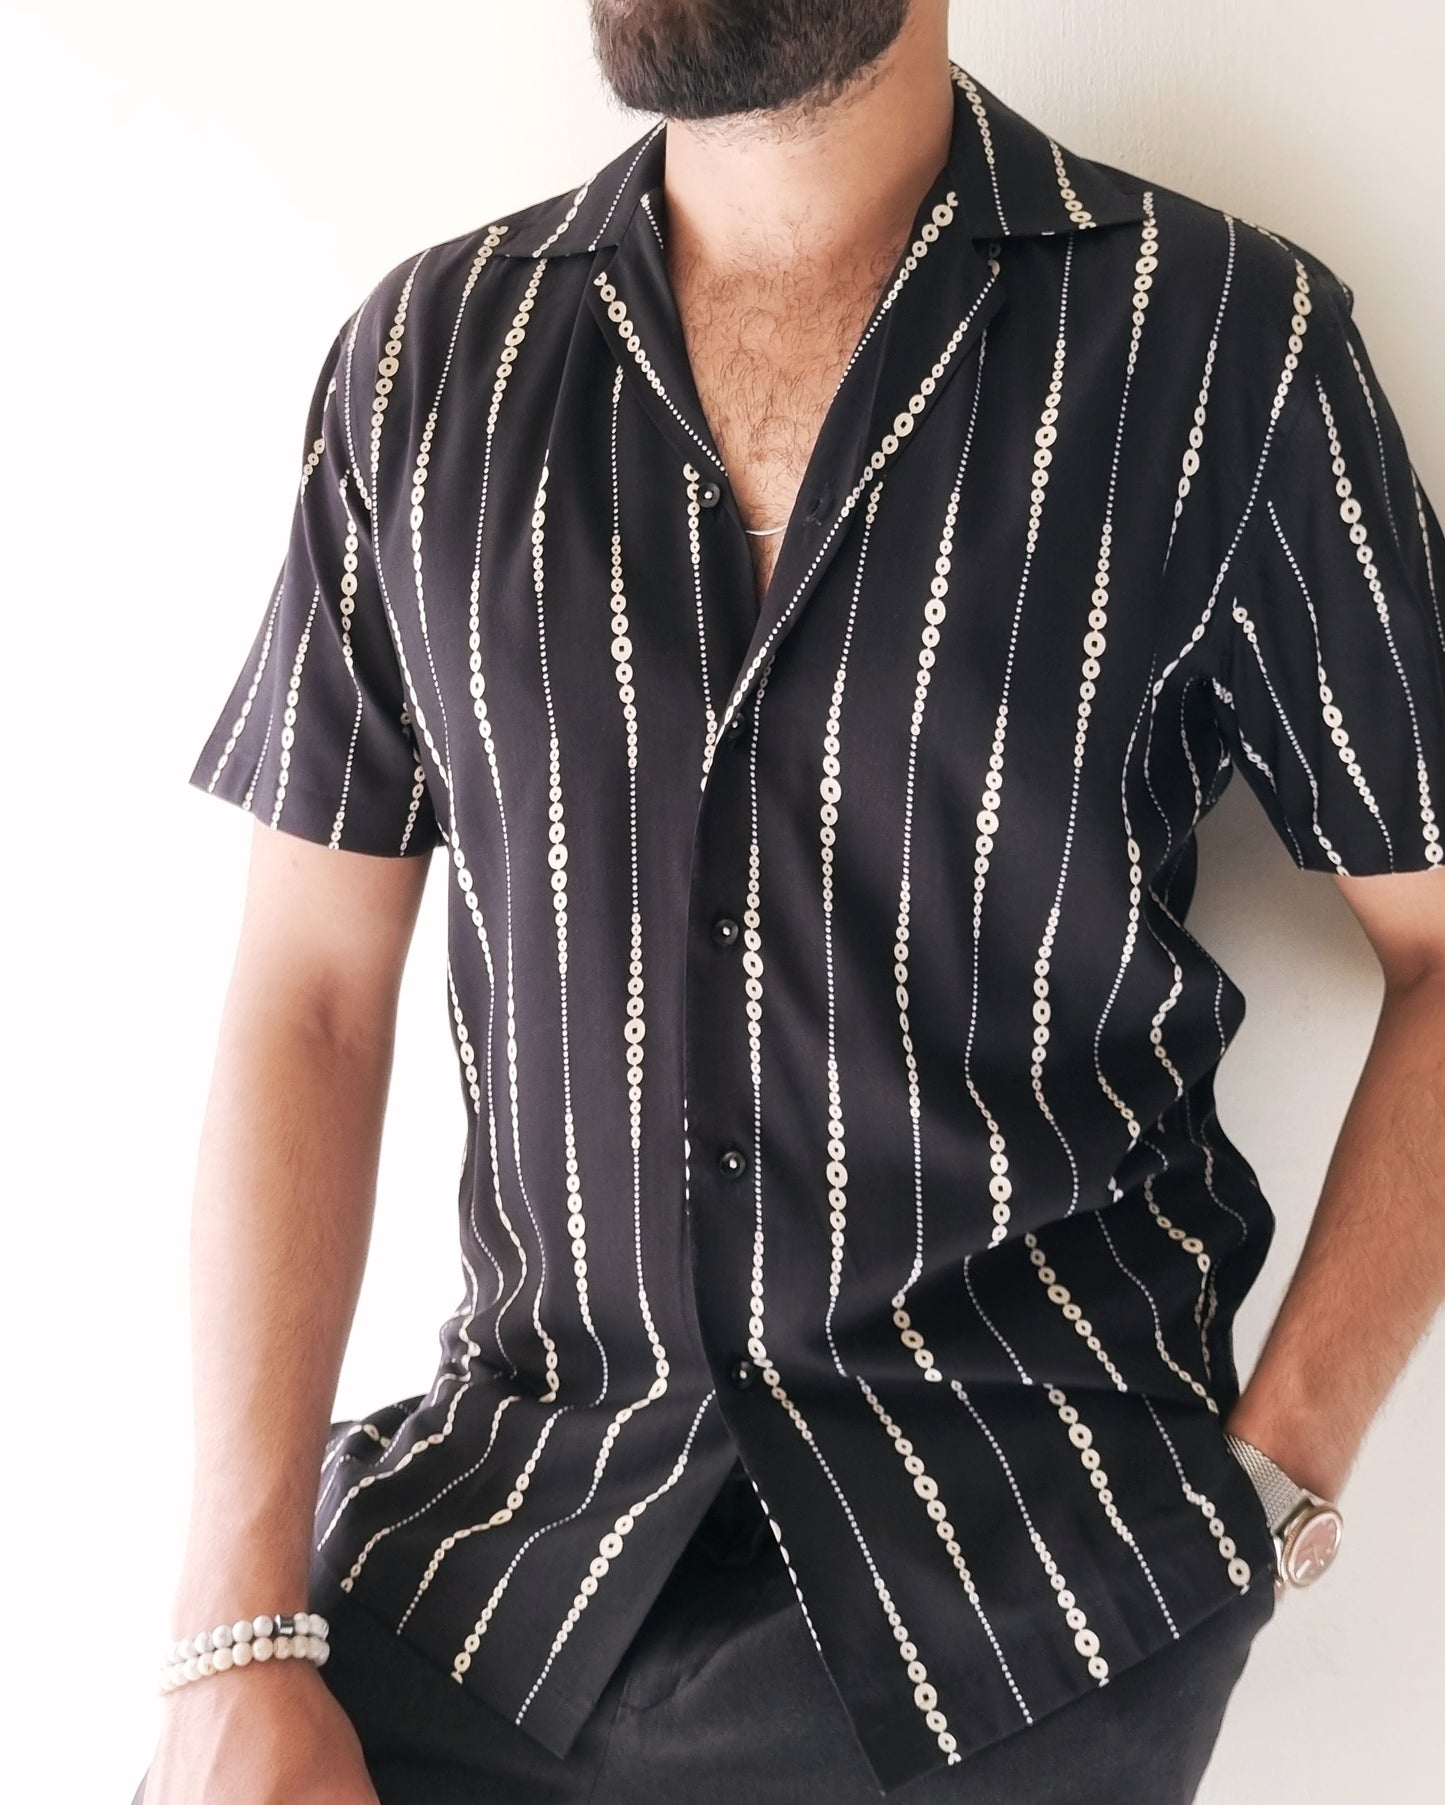 Dapper Dots & Stripes: Gauzy Shirt